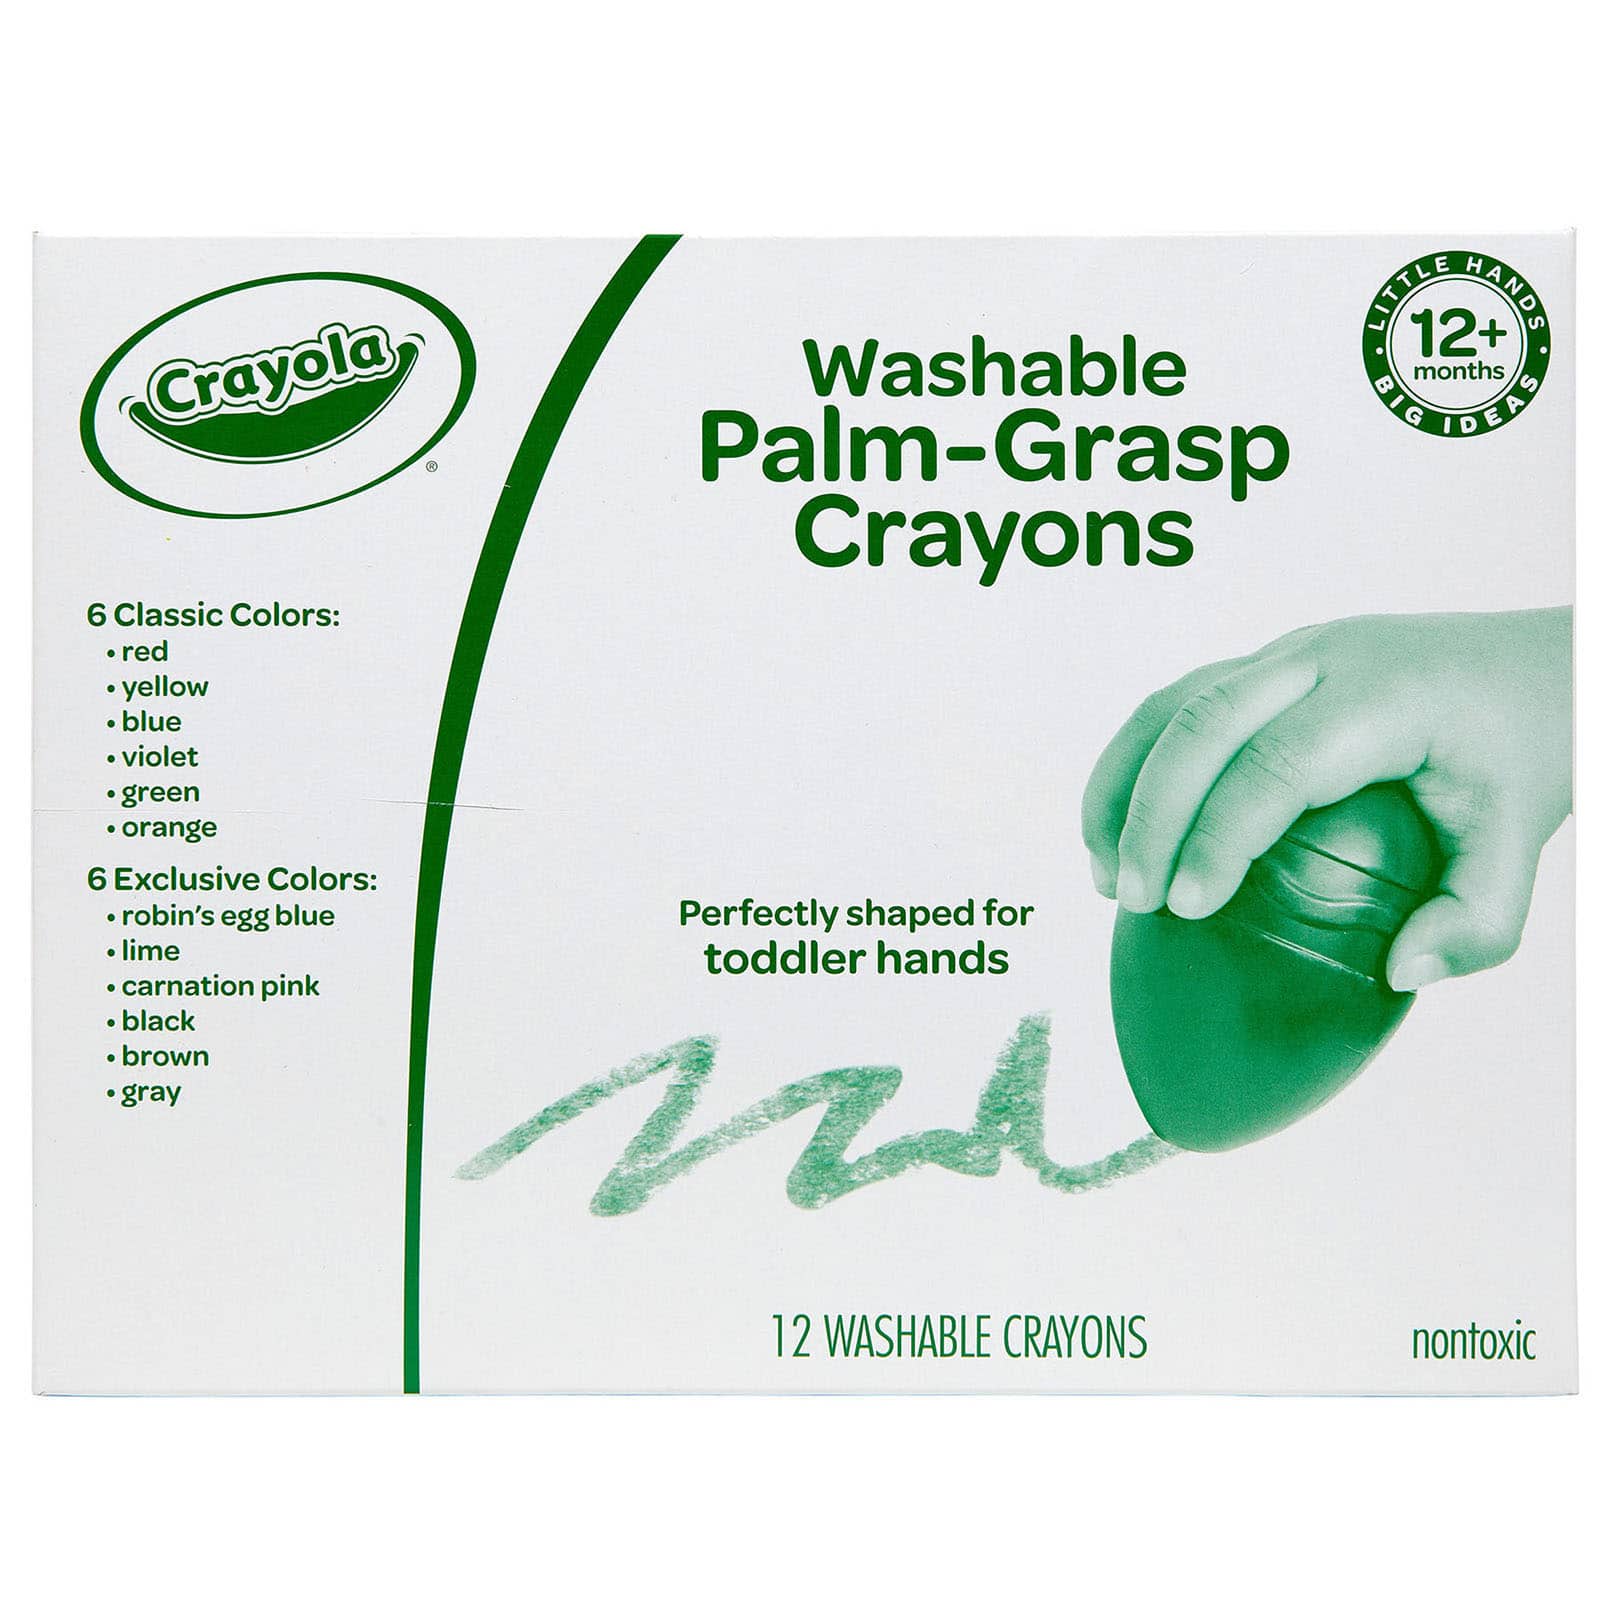 Crayola® Palm-Grasp Egg-Shaped Crayons